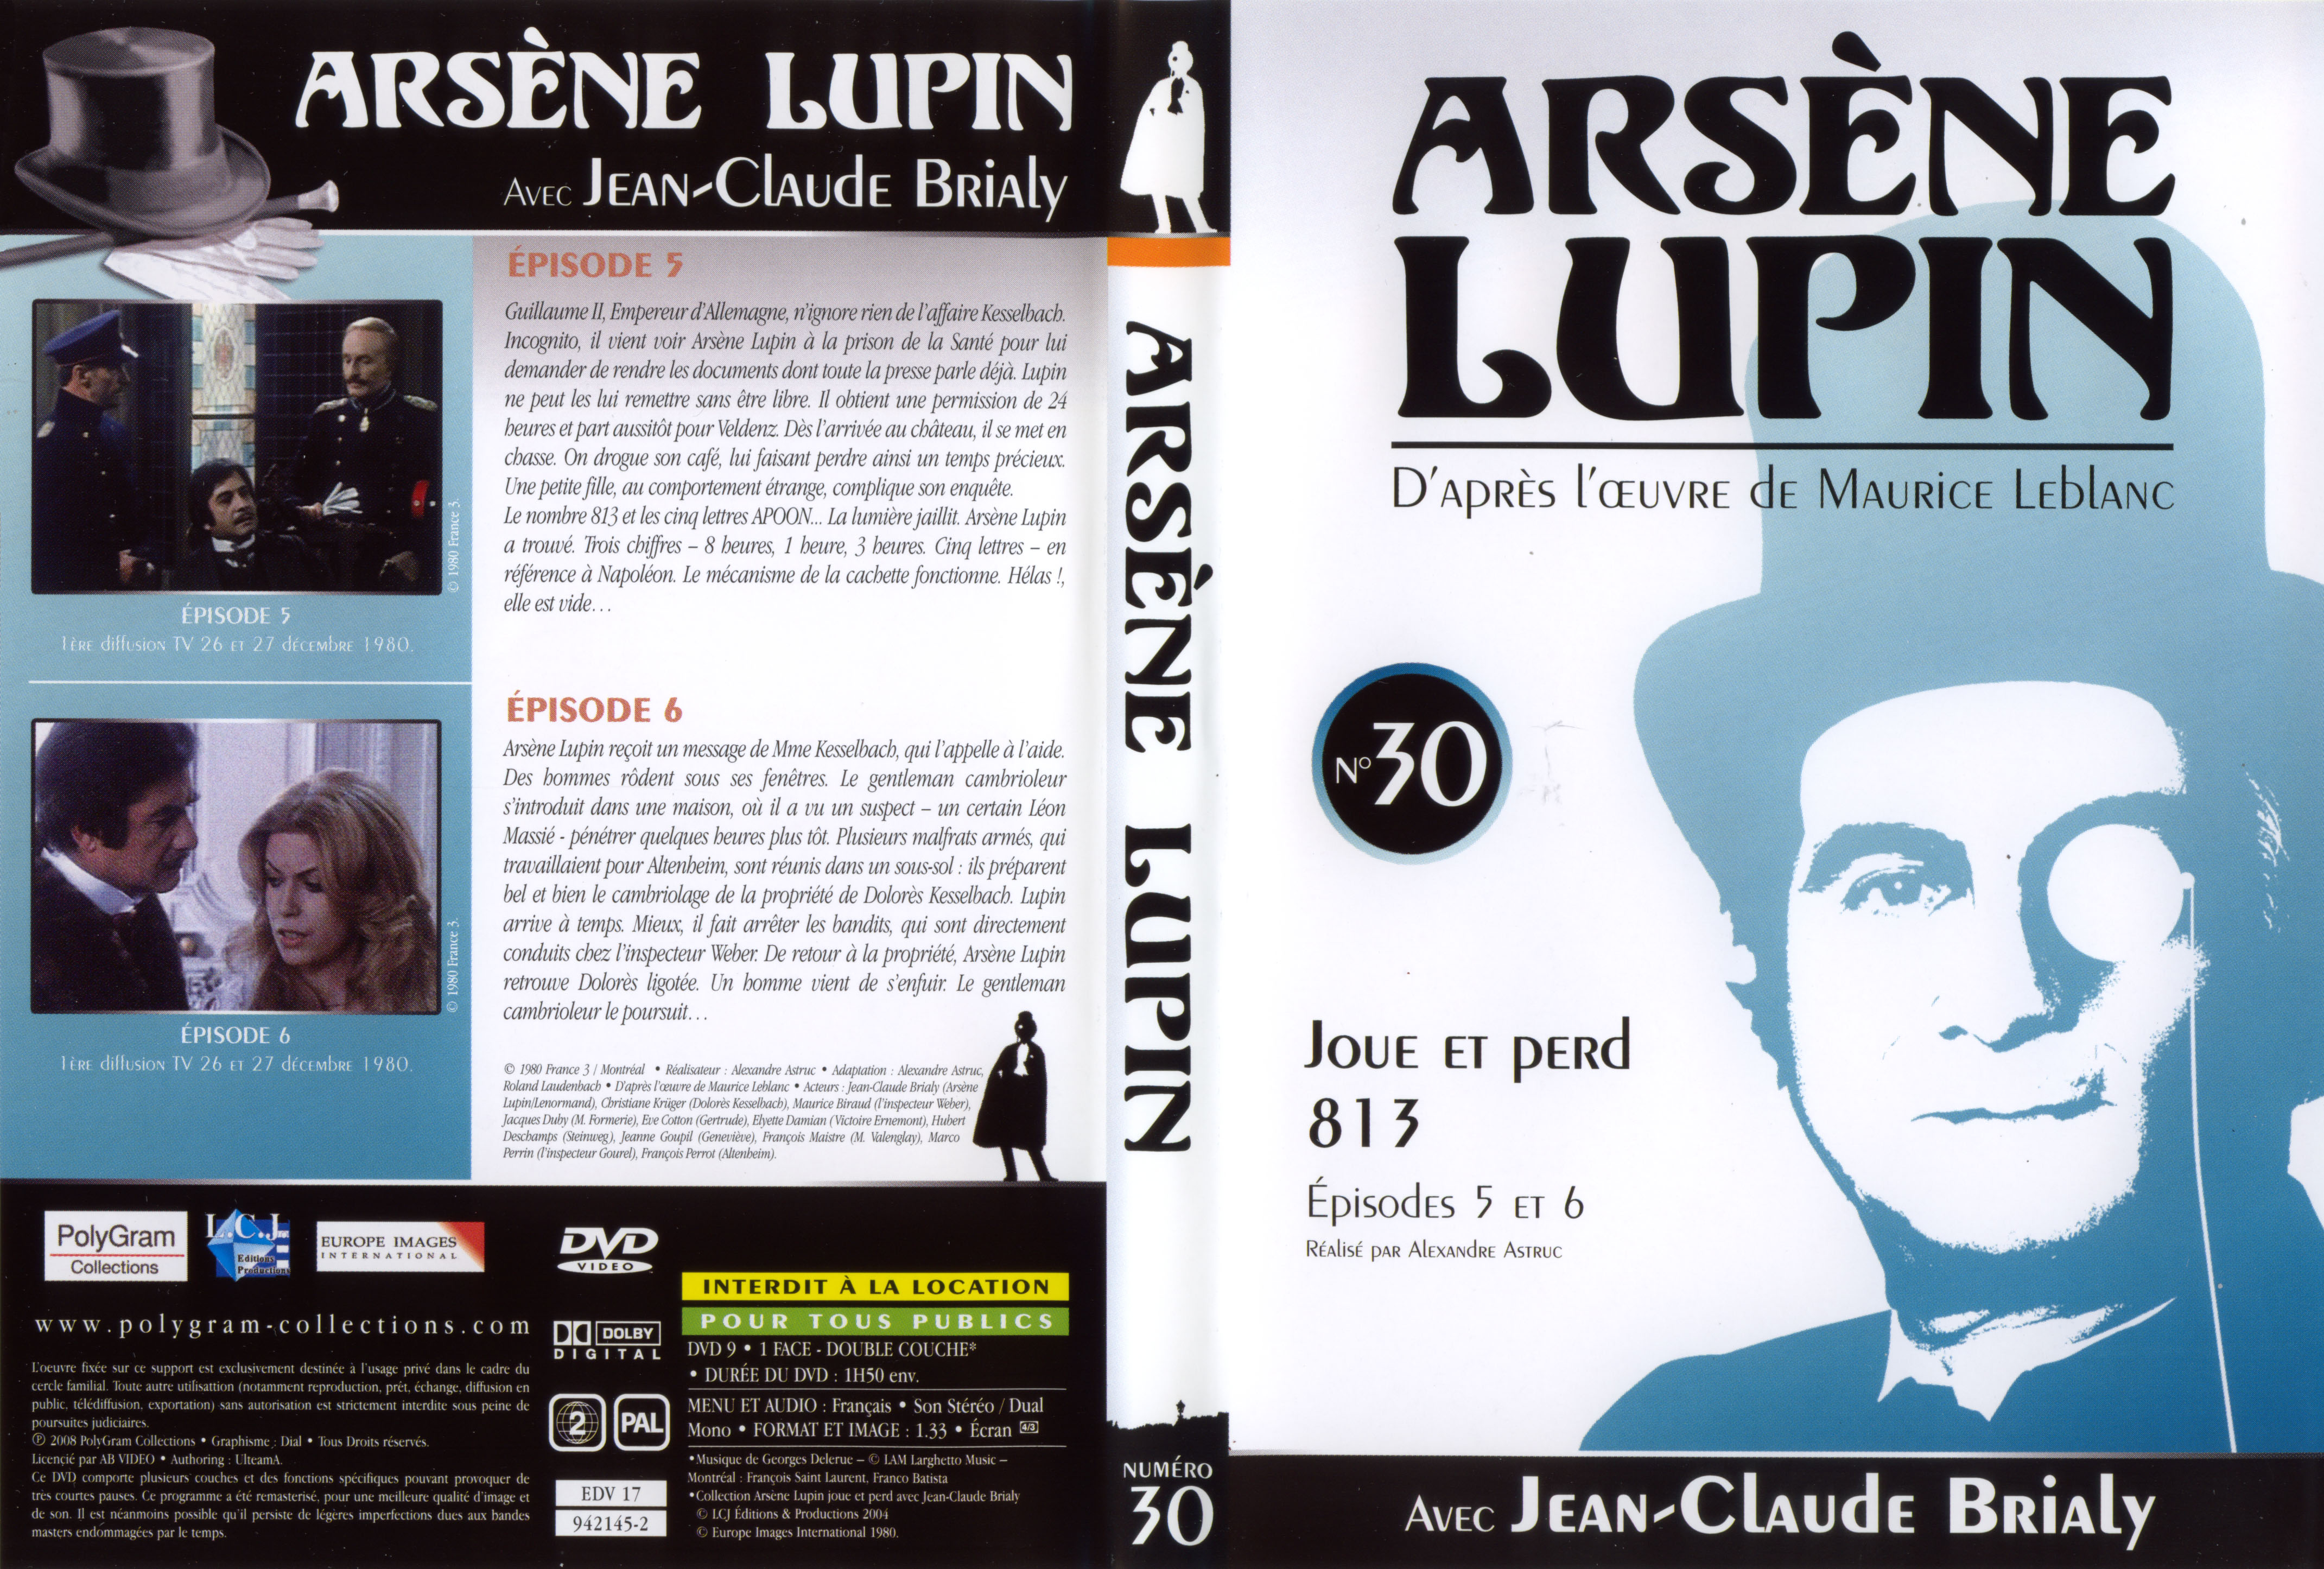 Jaquette DVD Arsene Lupin DVD 30